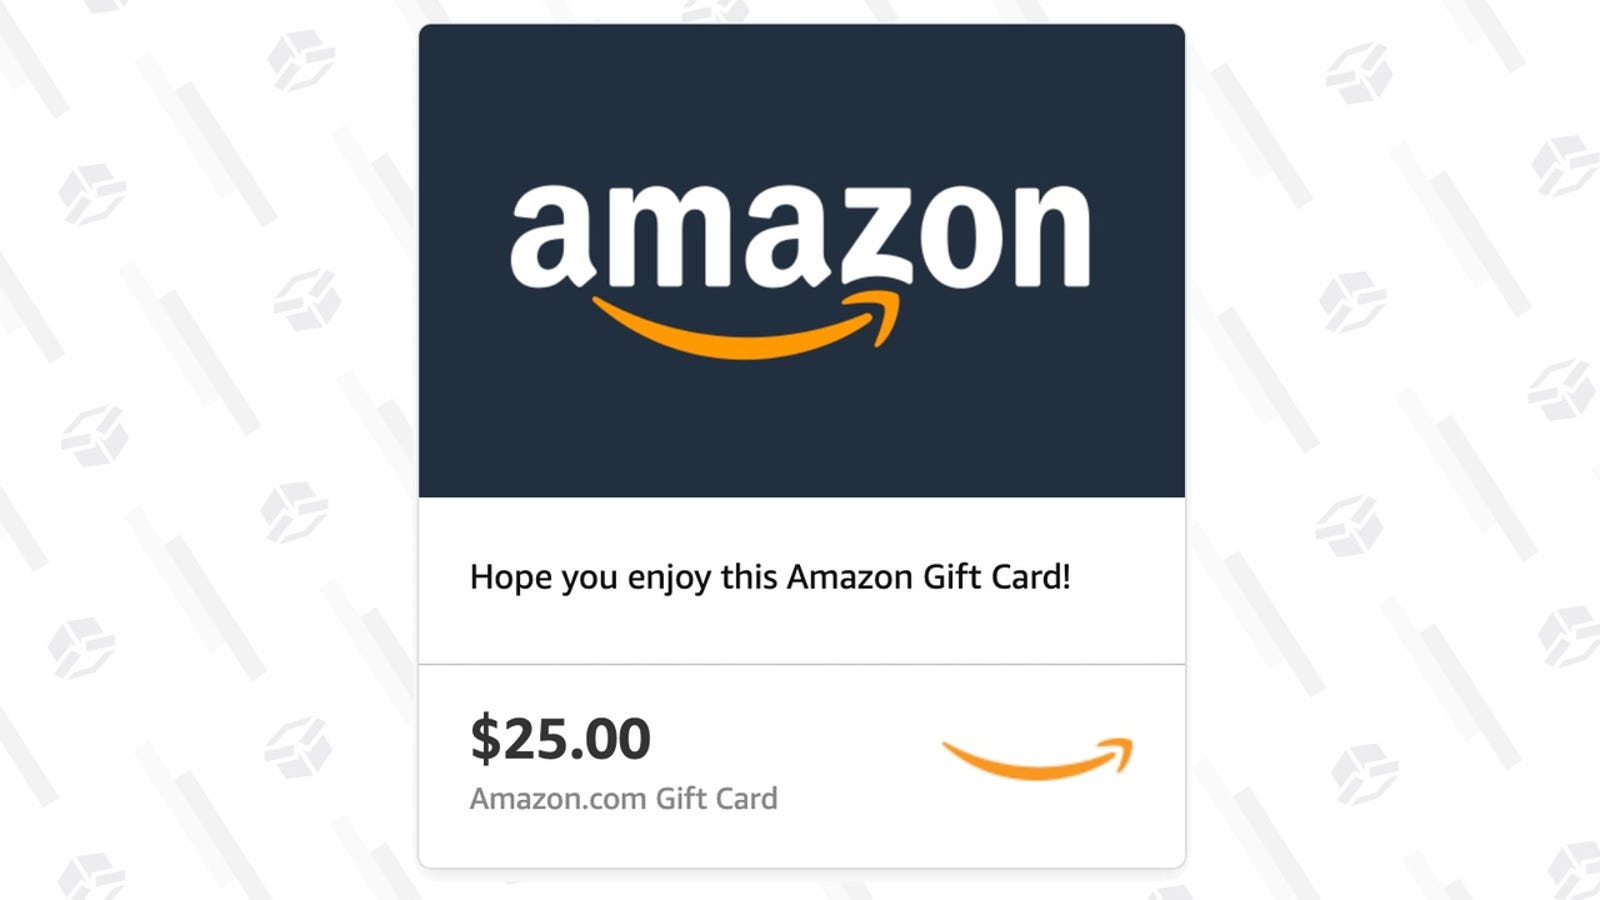 Amazon prime купить. Амазон Card. Atone Amazon. 25 Amazon Gift Card. Amazon Prime promotion.